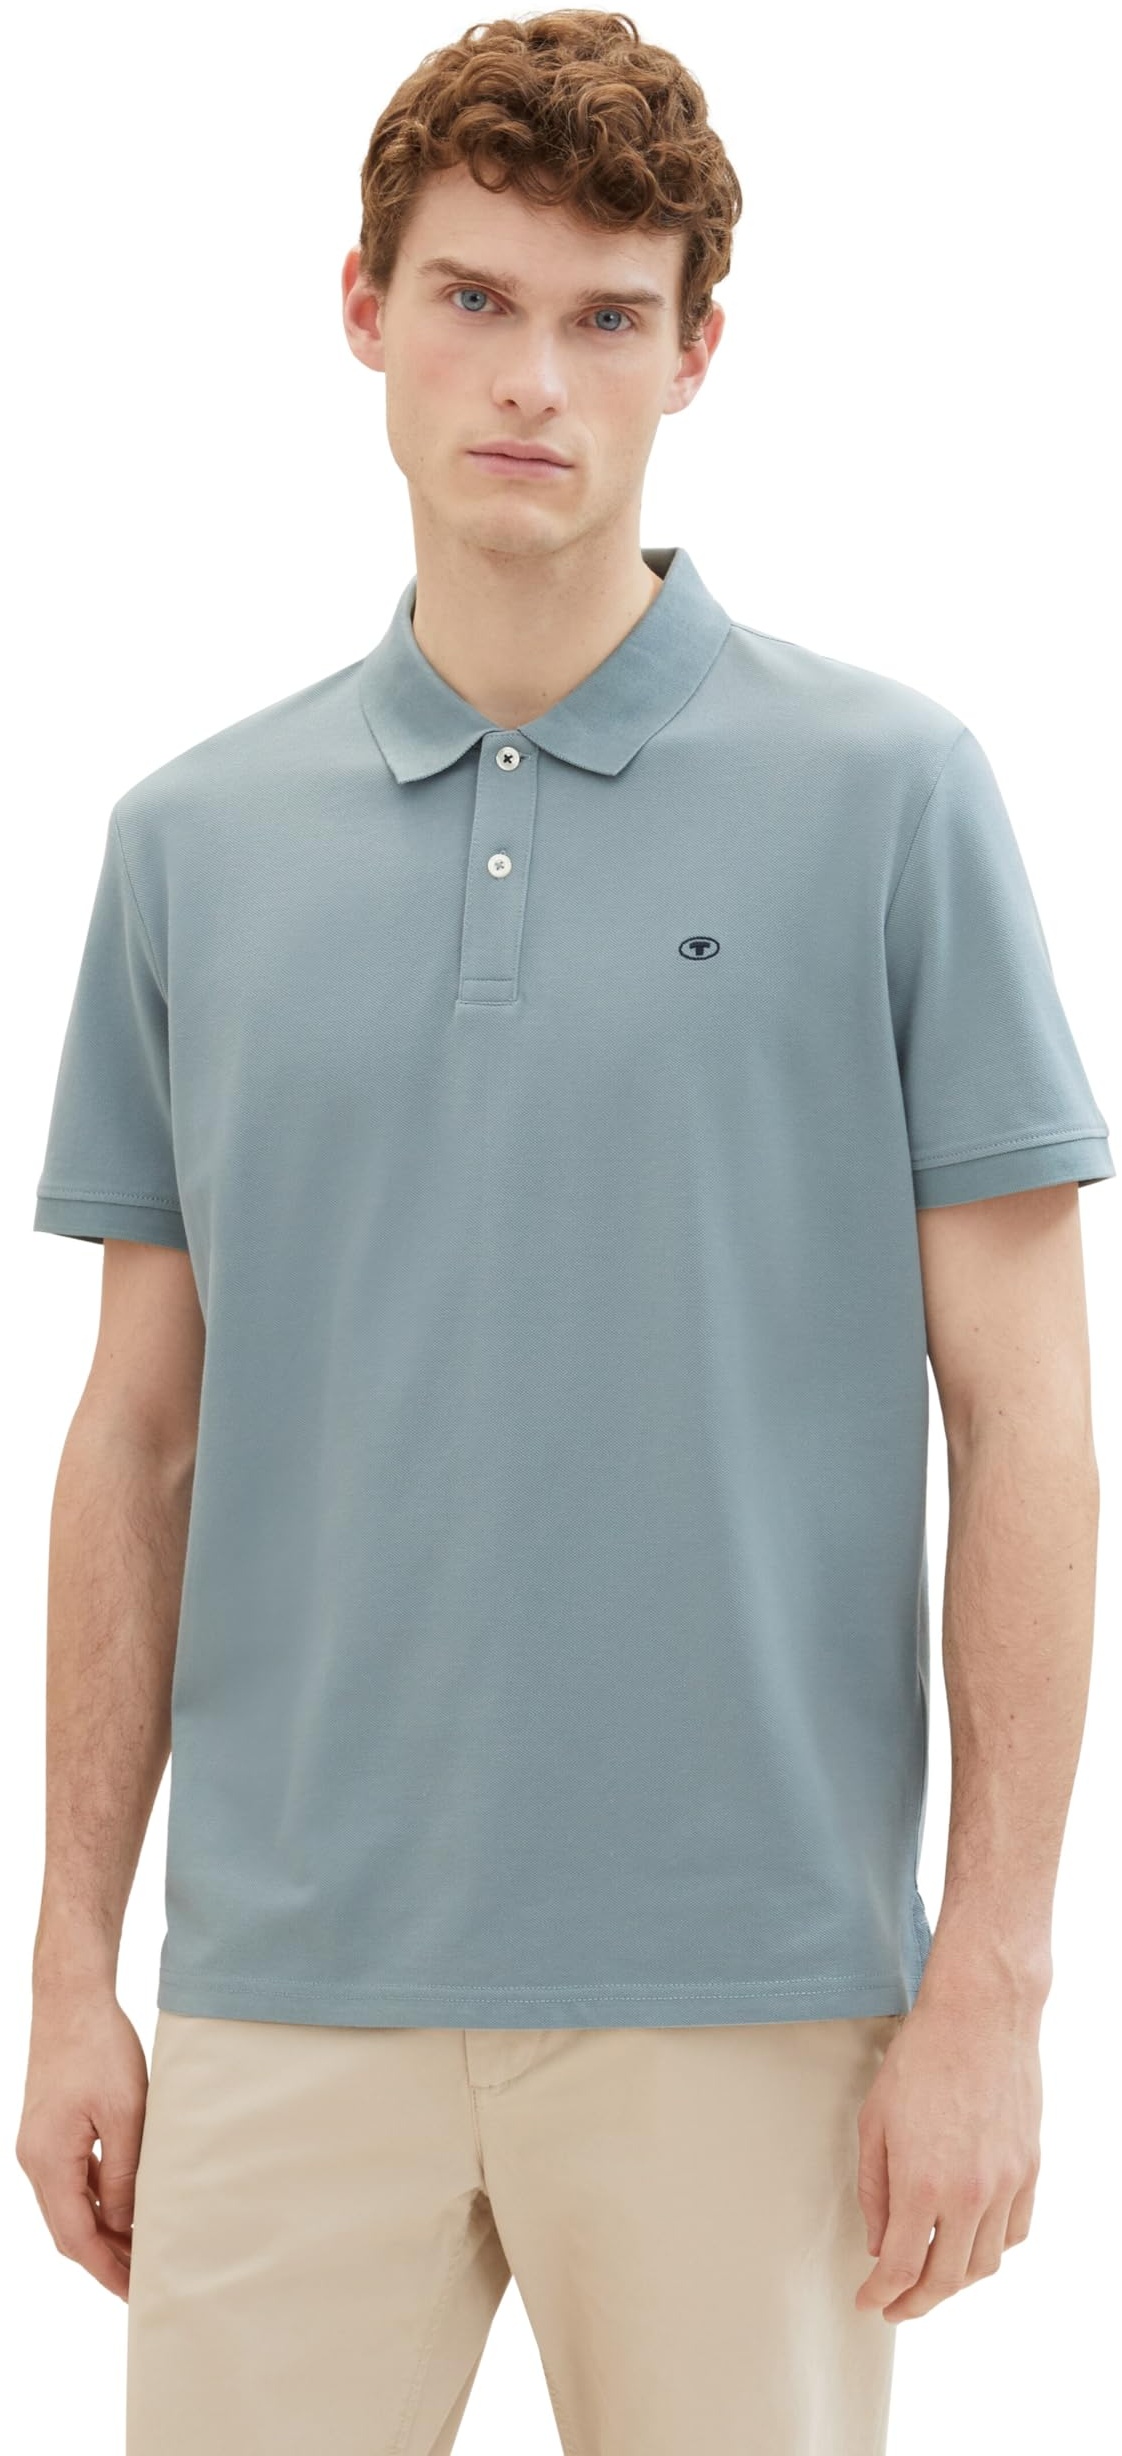 TOM TAILOR Herren Basic Piqué Poloshirt, 27475 - Grey Mint, XXL